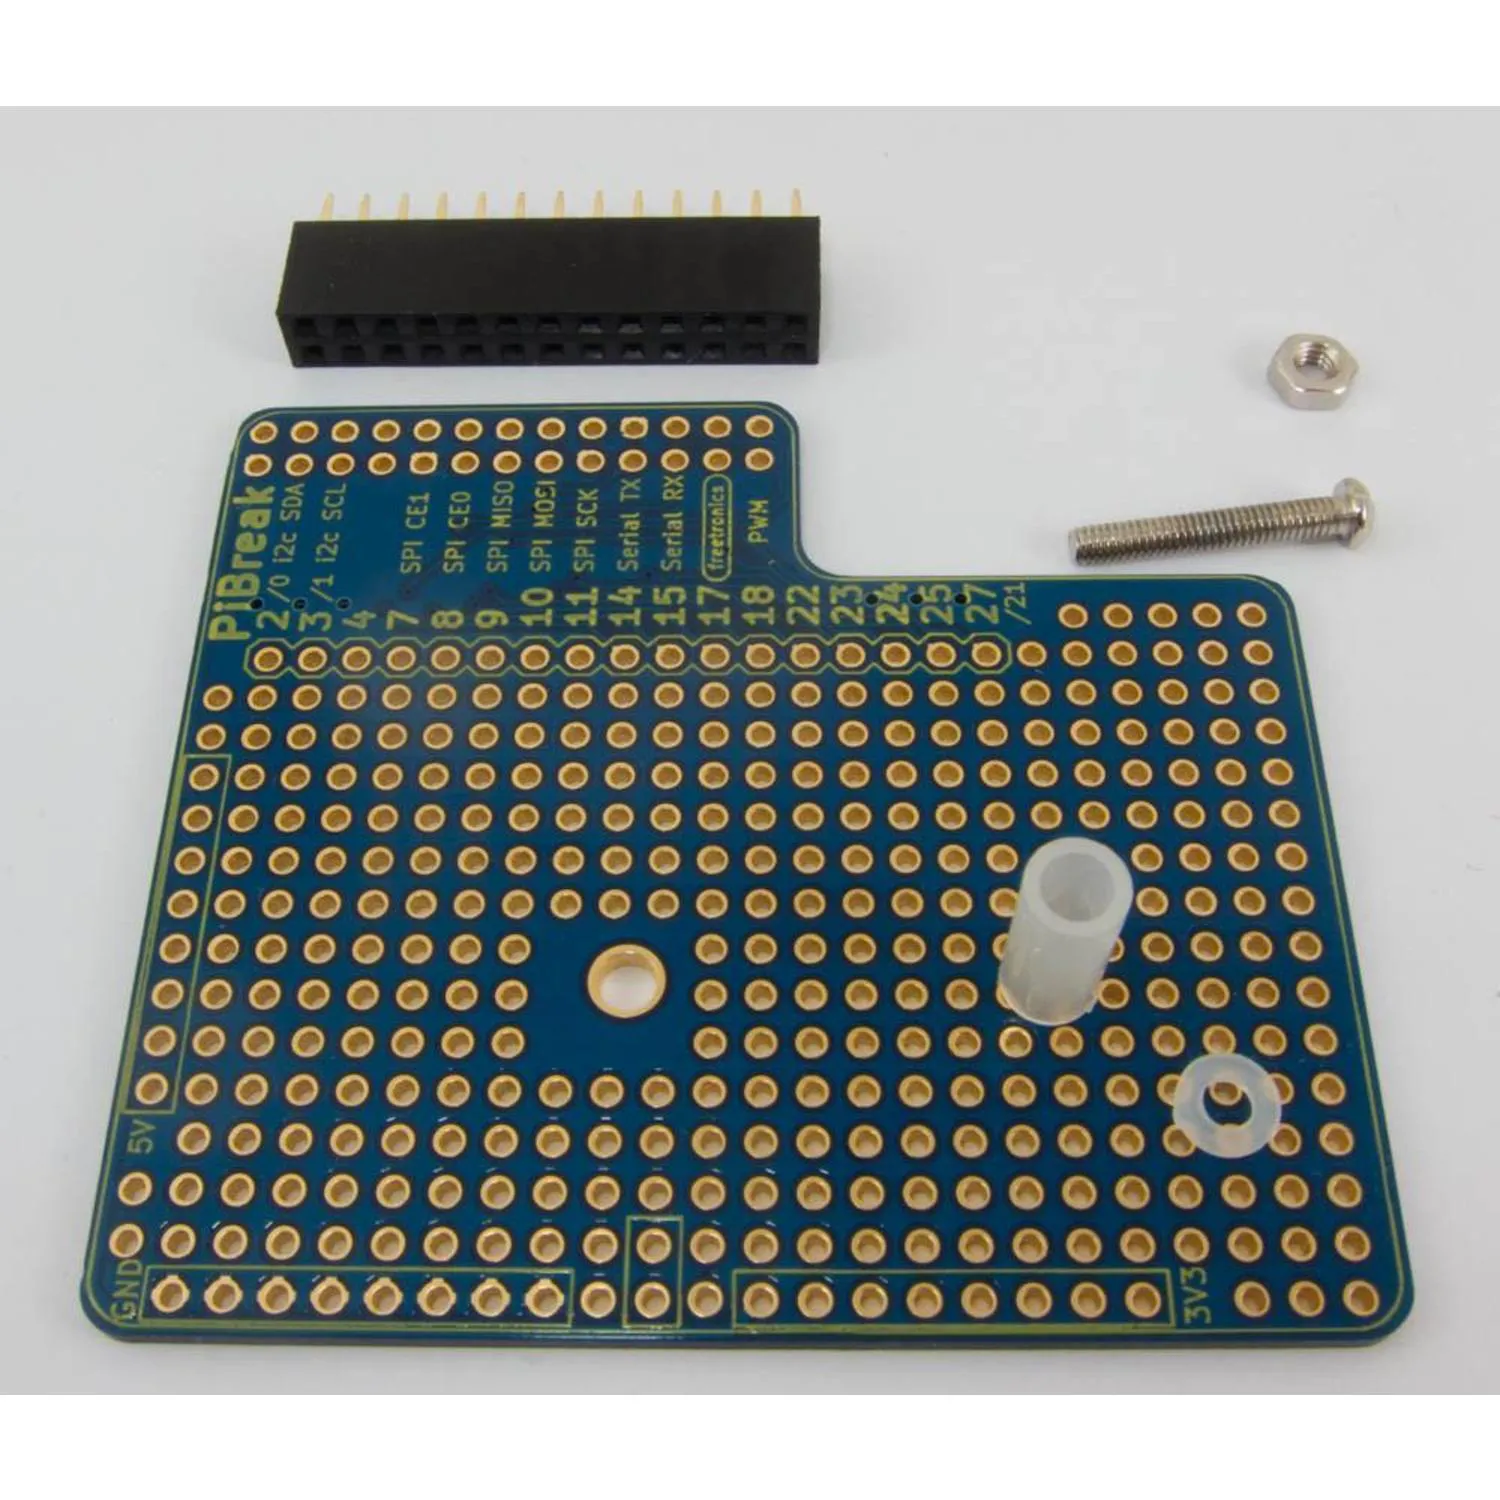 Photo of PiBreak Raspberry Pi Prototyping Board